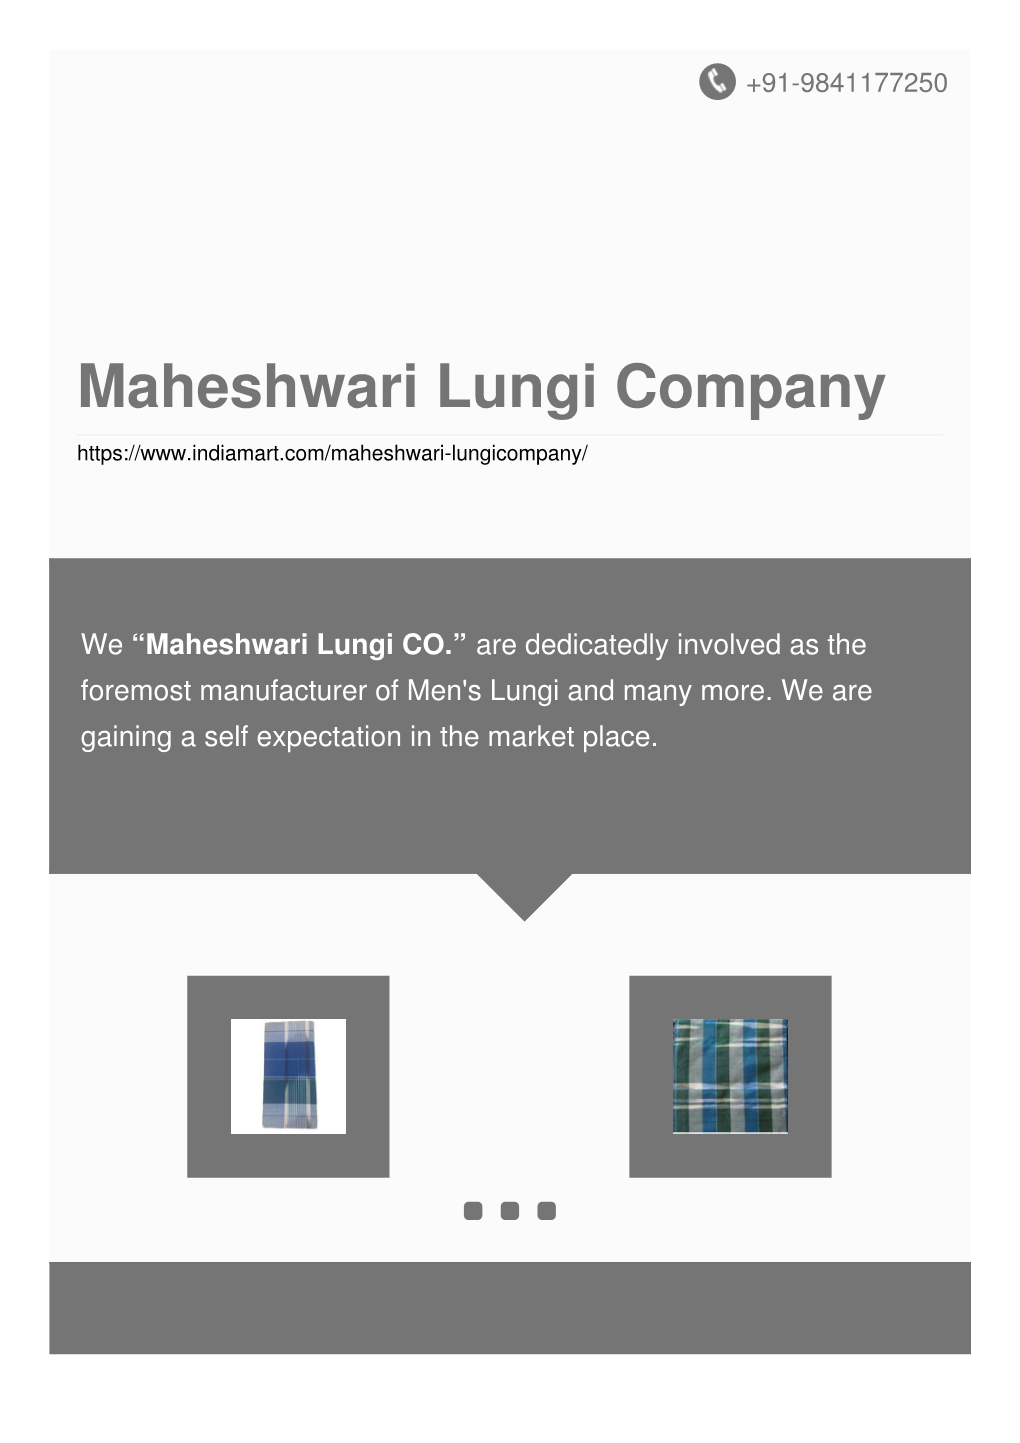 Maheshwari Lungi Company